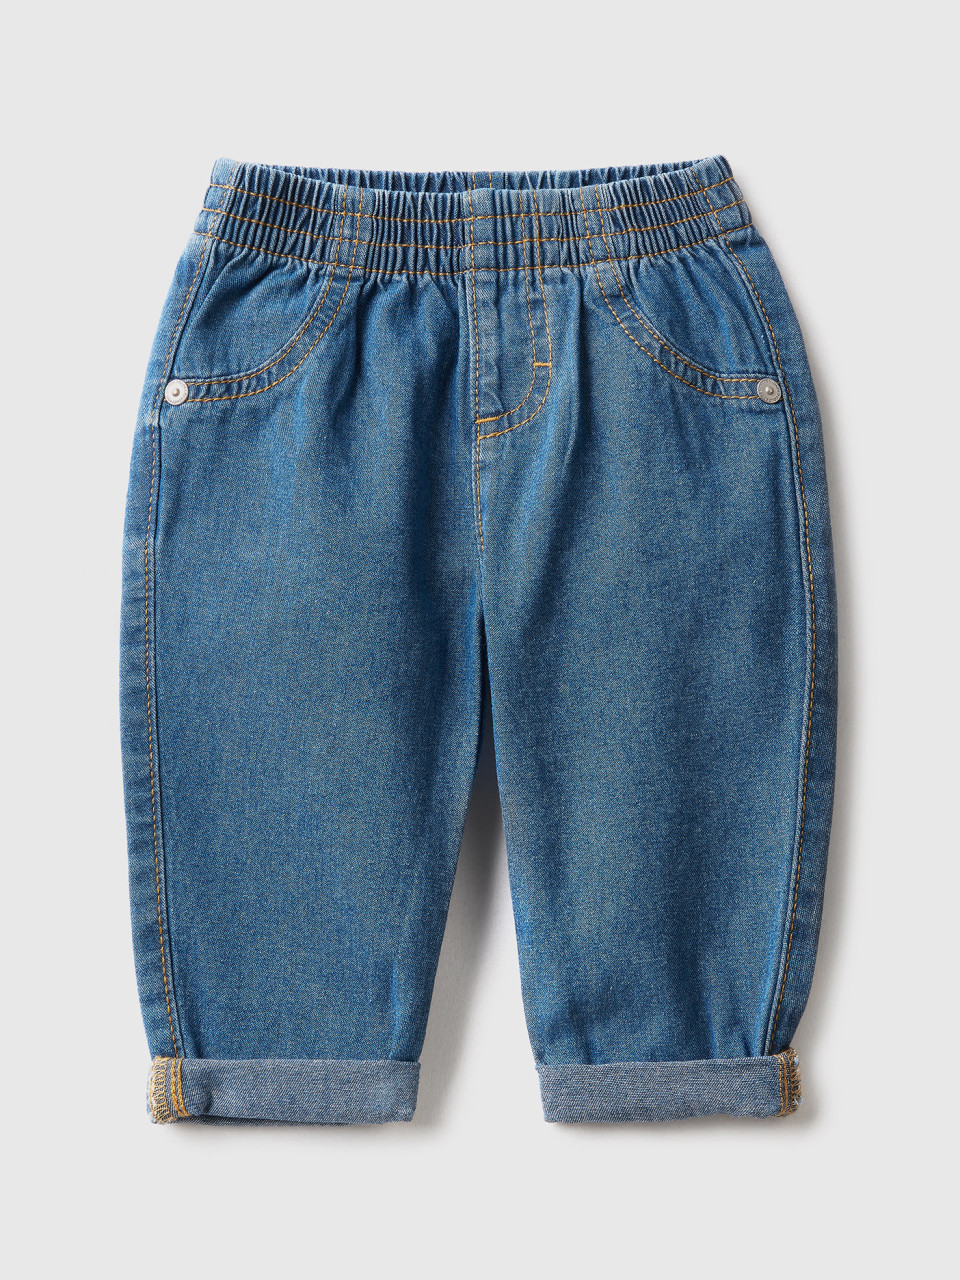 Benetton, Jeans In 100% Cotton Denim, Light Blue, Kids